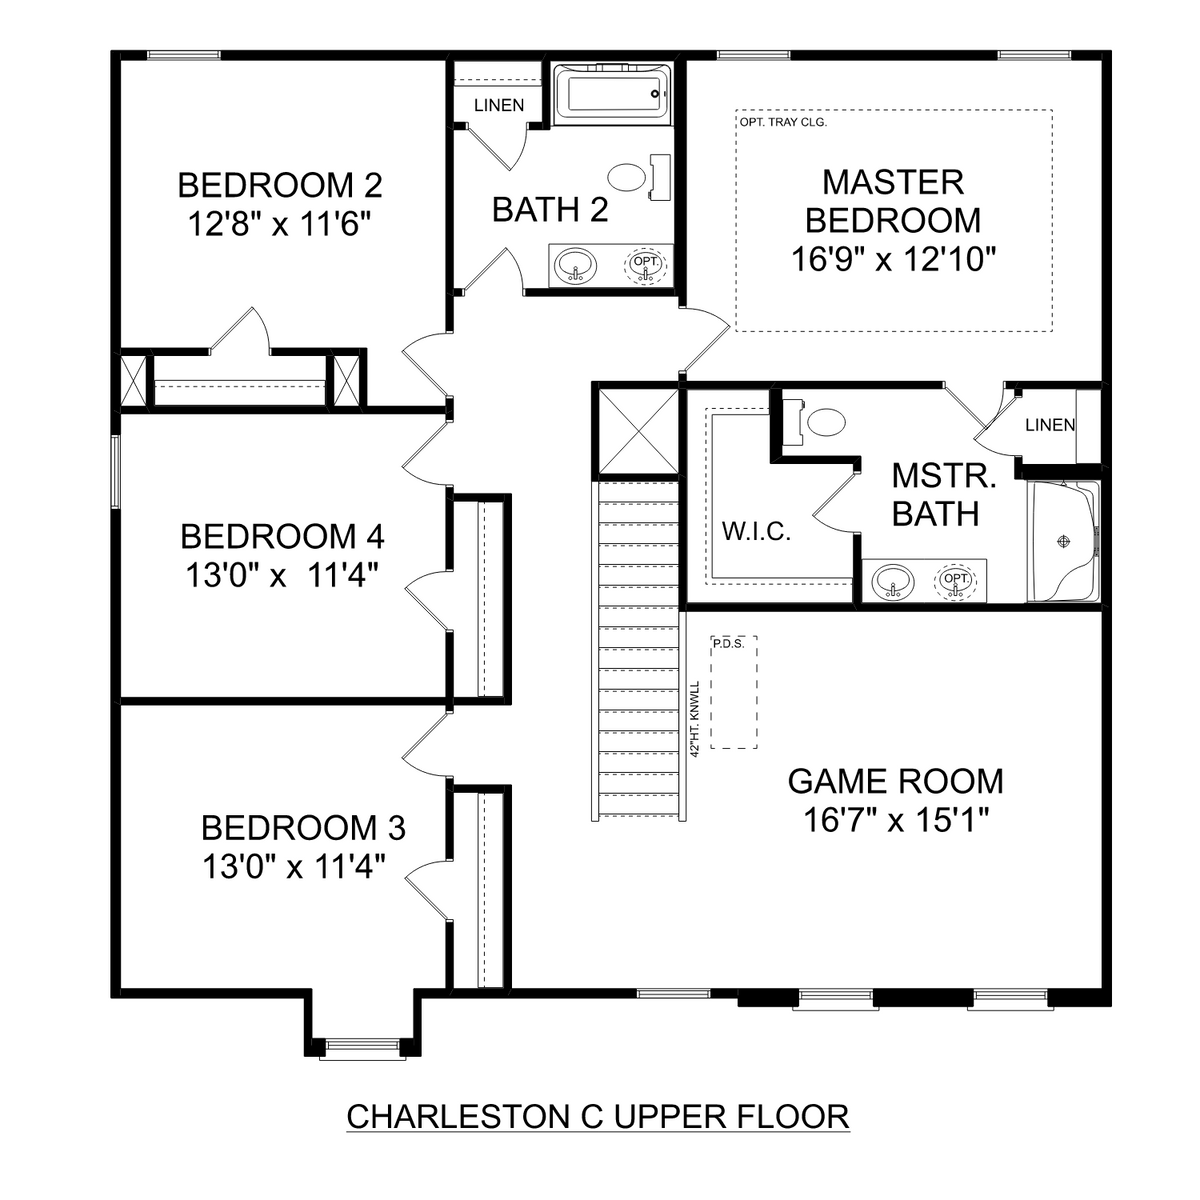 2 - The Charleston C floor plan layout for 27412 Mckenna Drive in Davidson Homes' Mallard Landing community.